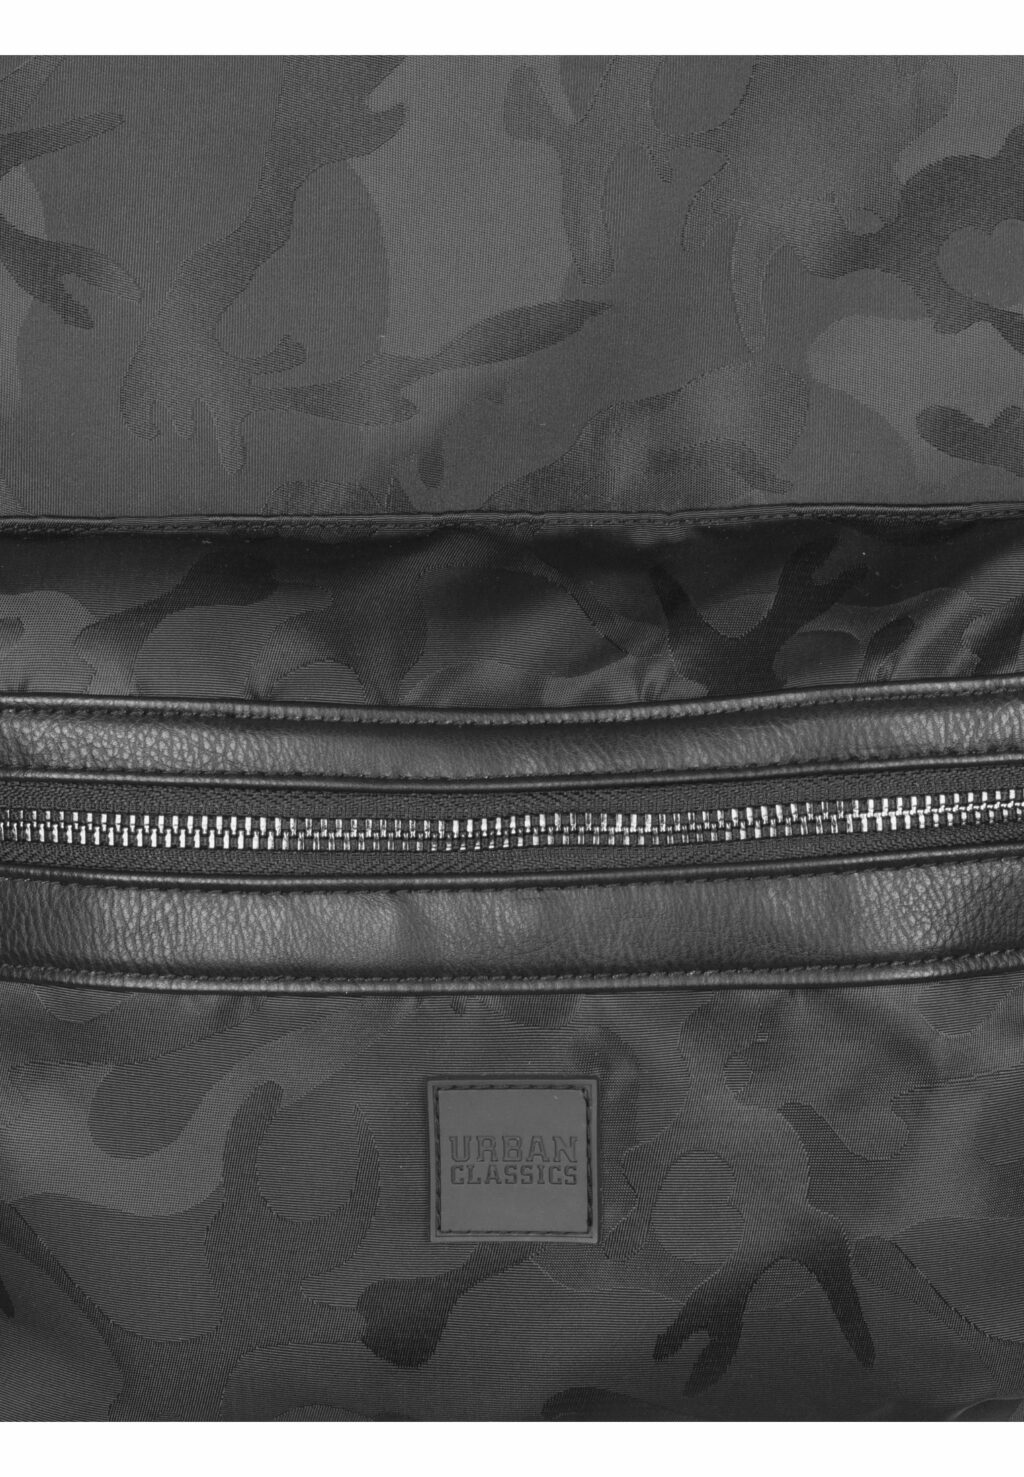 Camo Jacquard Backpack black camo one TB1699